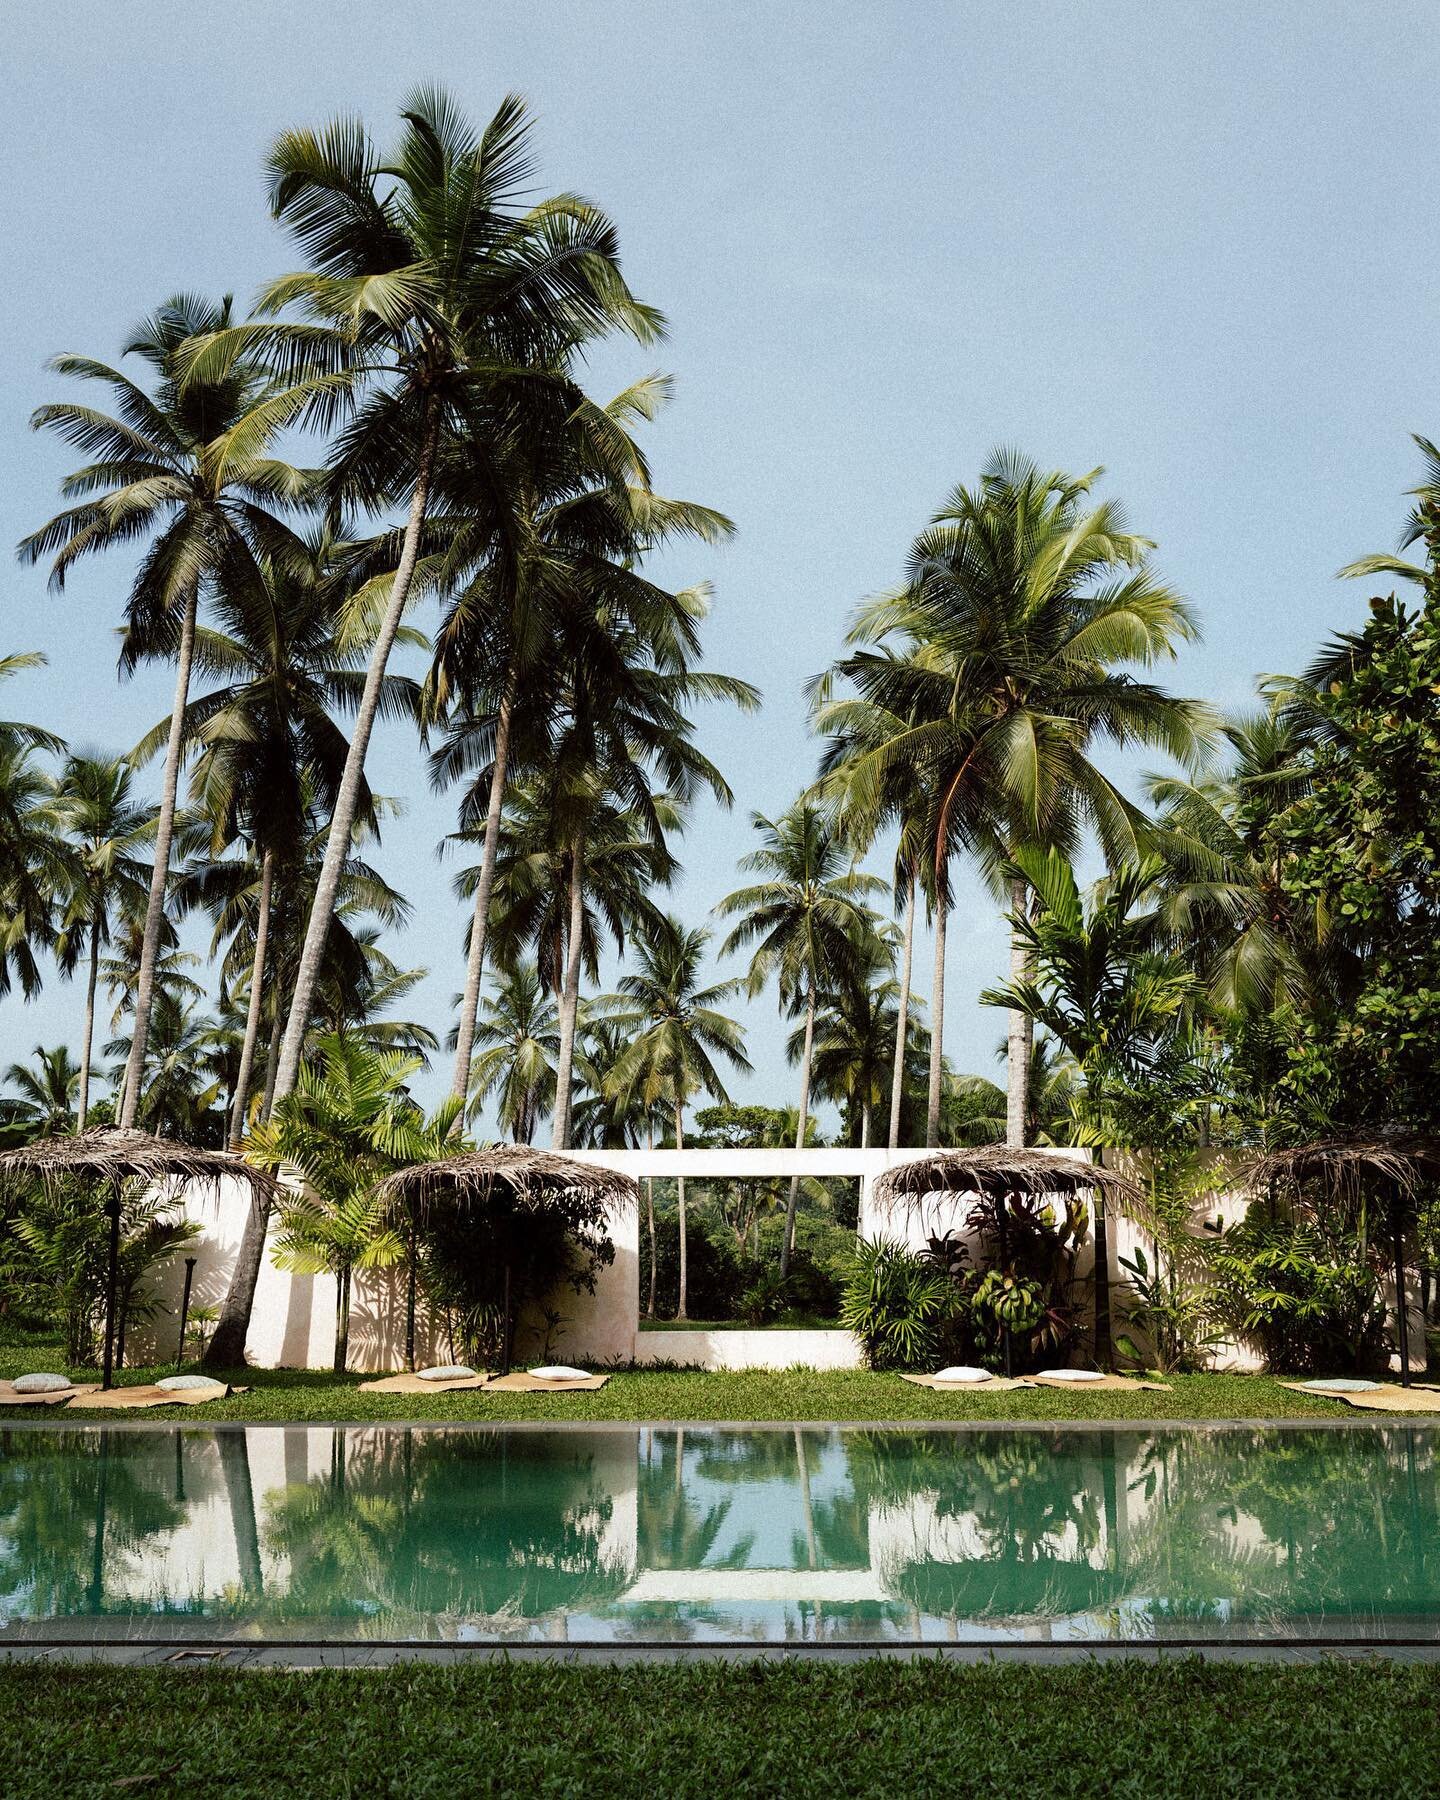 Built to stir the soul &mdash; @palmhotelsrilanka 

#palmhotel #srilanka #luxurytravel